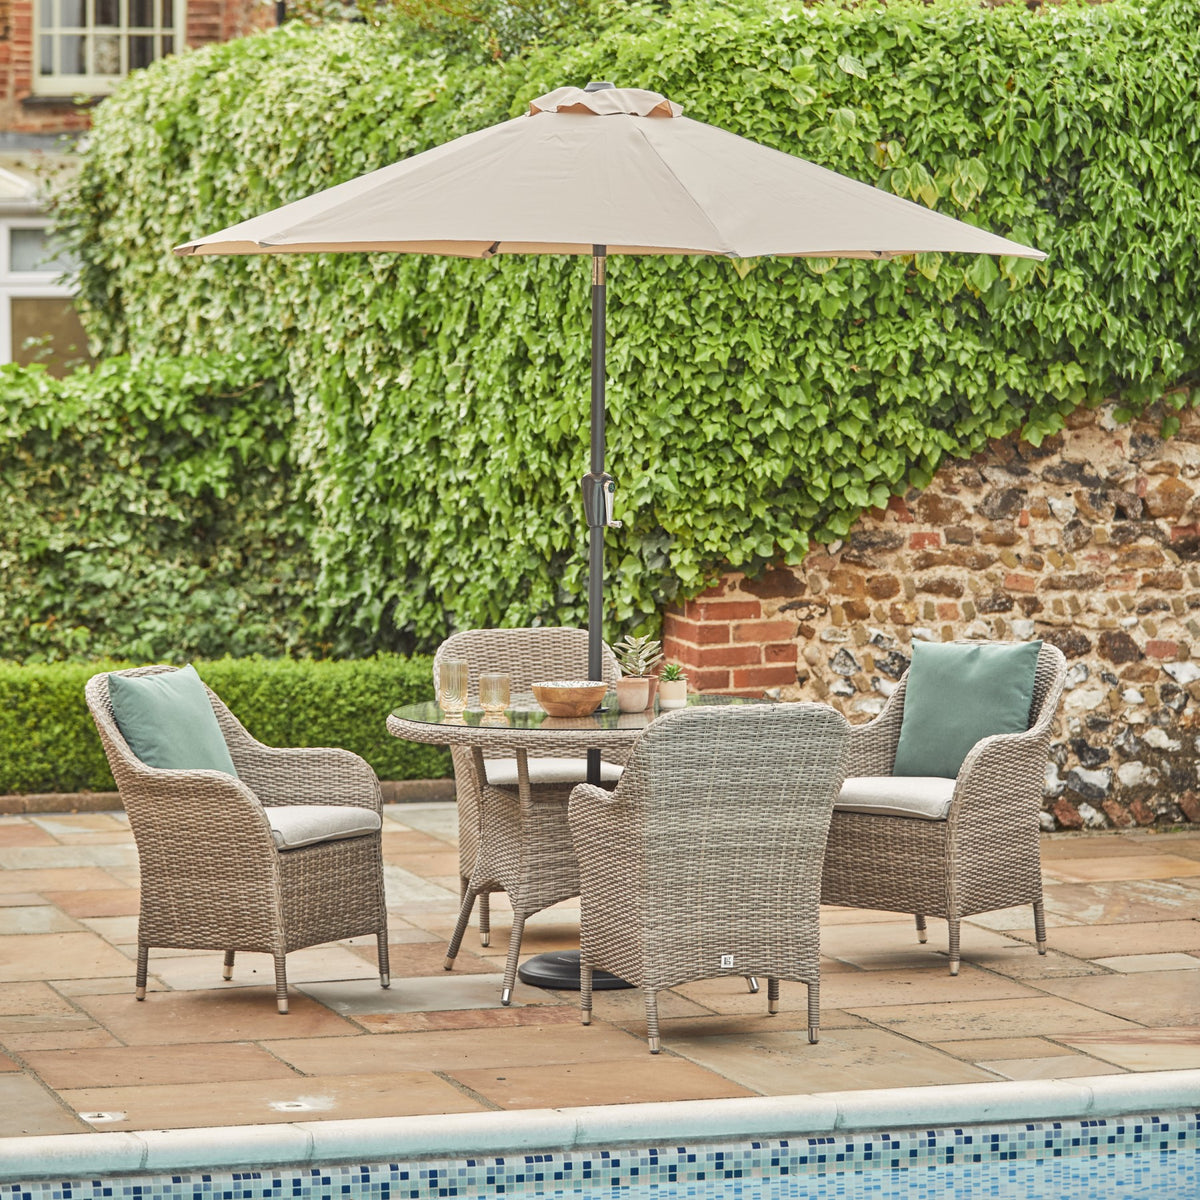 LG Outdoor Monte Carlo Sand Rattan Weave 4 Seat Garden Furniture Dining Set